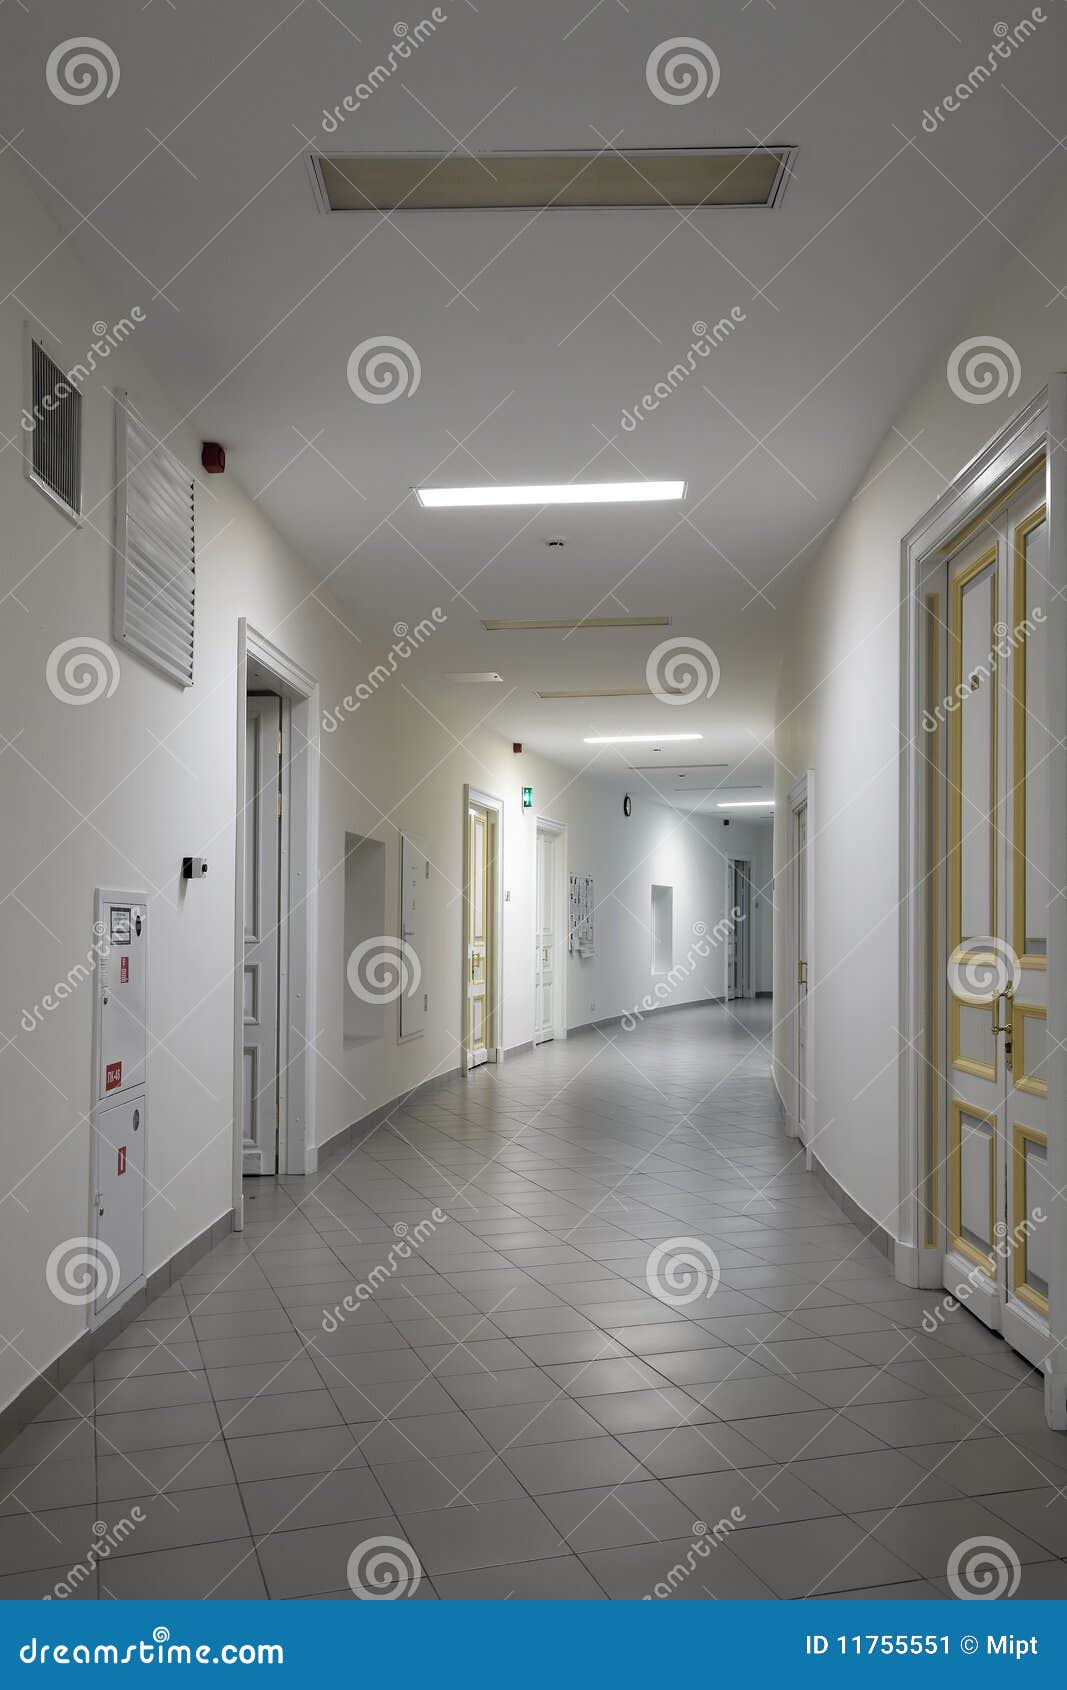 Corridor In Modern Hospital Stock Image Image Of Health